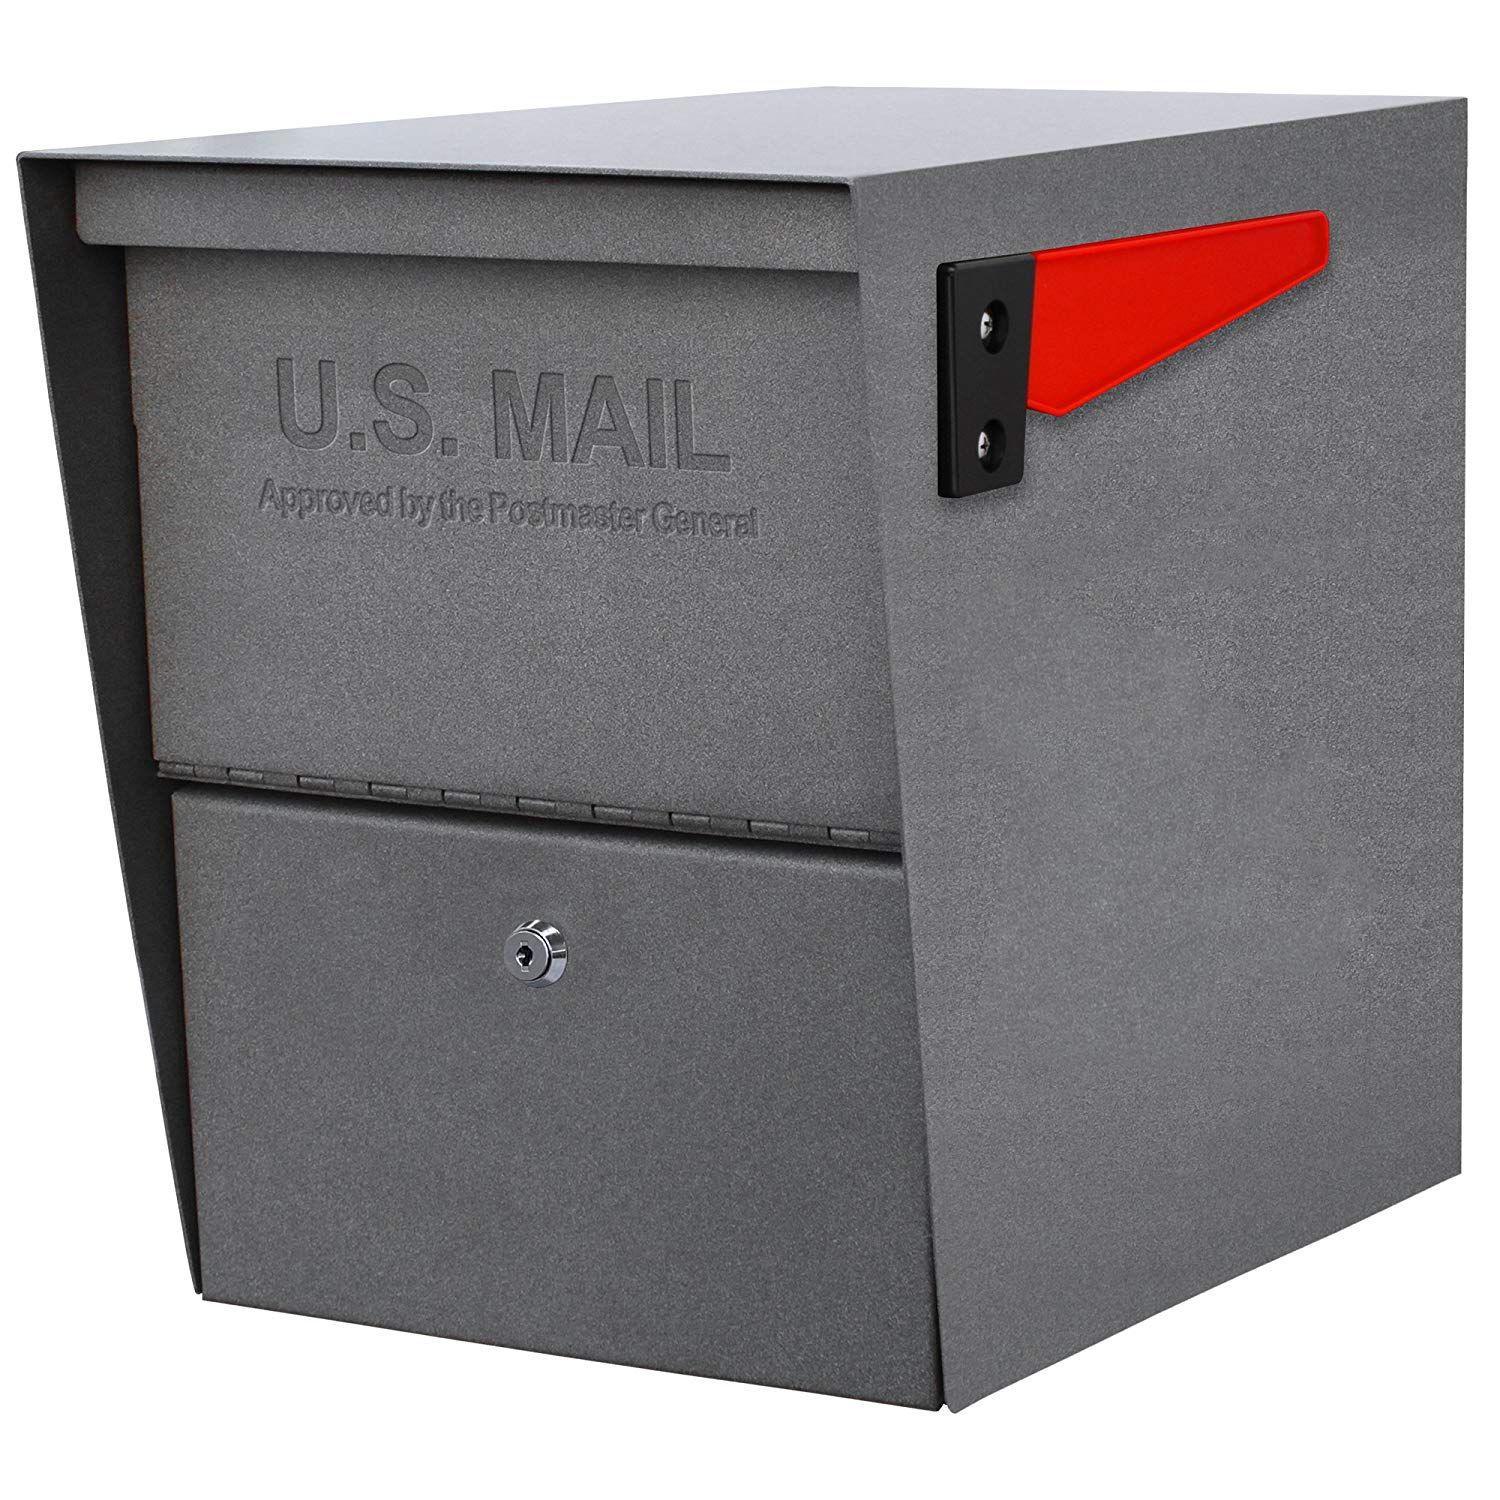 Mail Boss 7205 